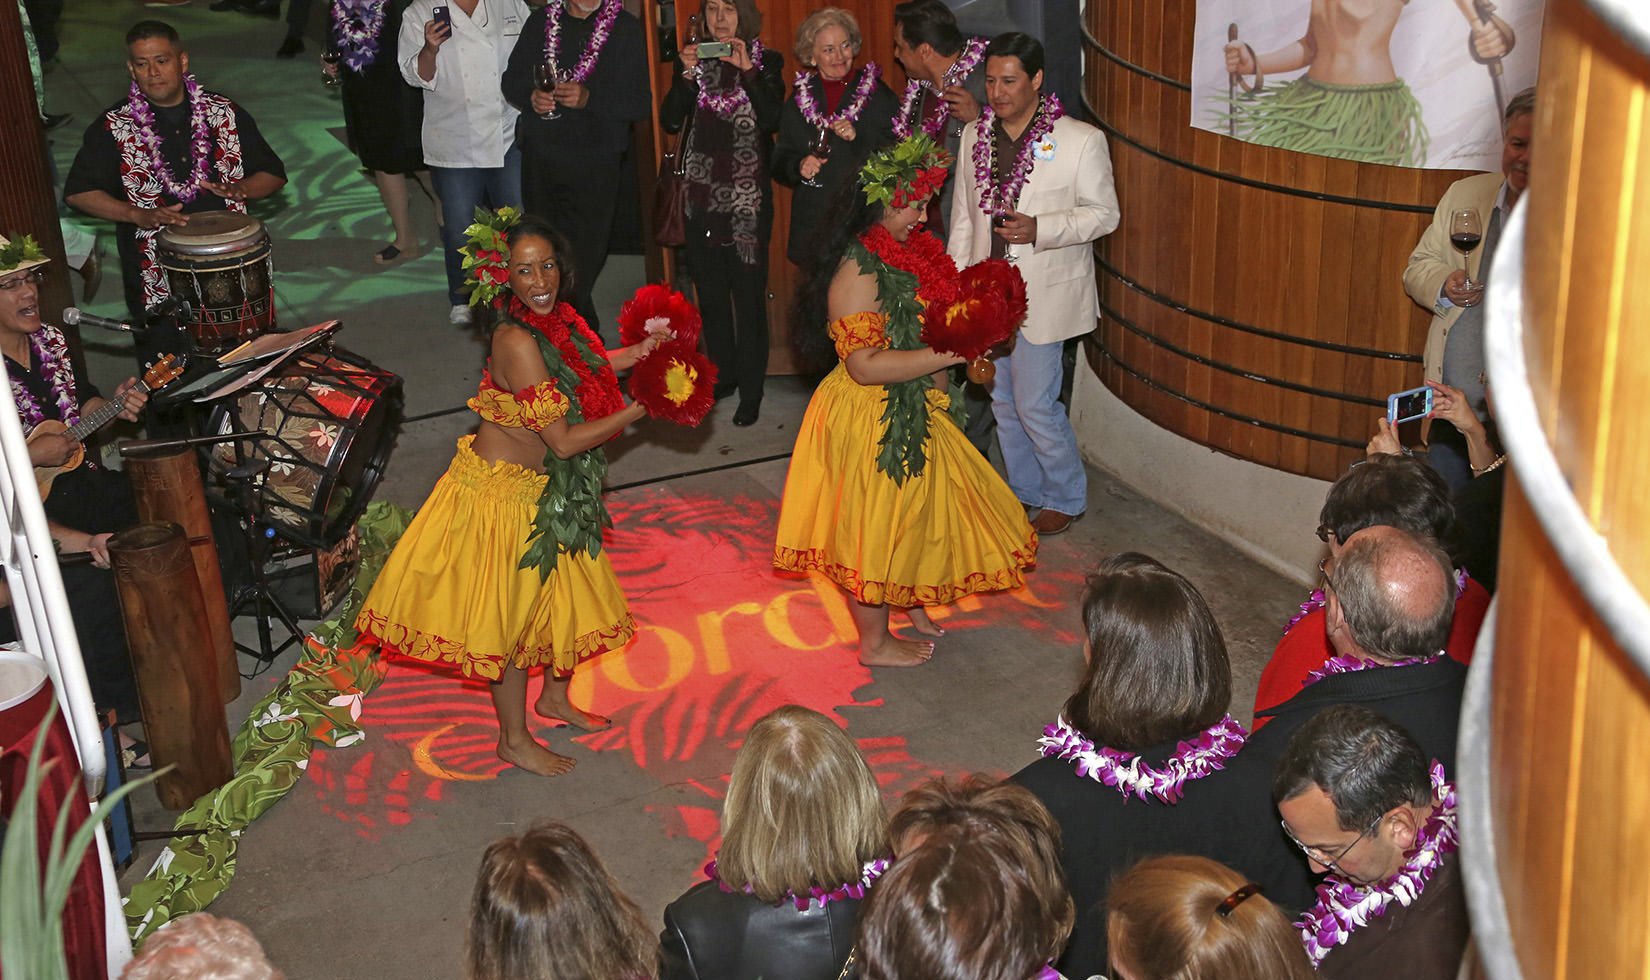 dancers performing at a Spirit of Hawaii themed Christmas at Jordan event in the largo oak tank room at Jordan Winery